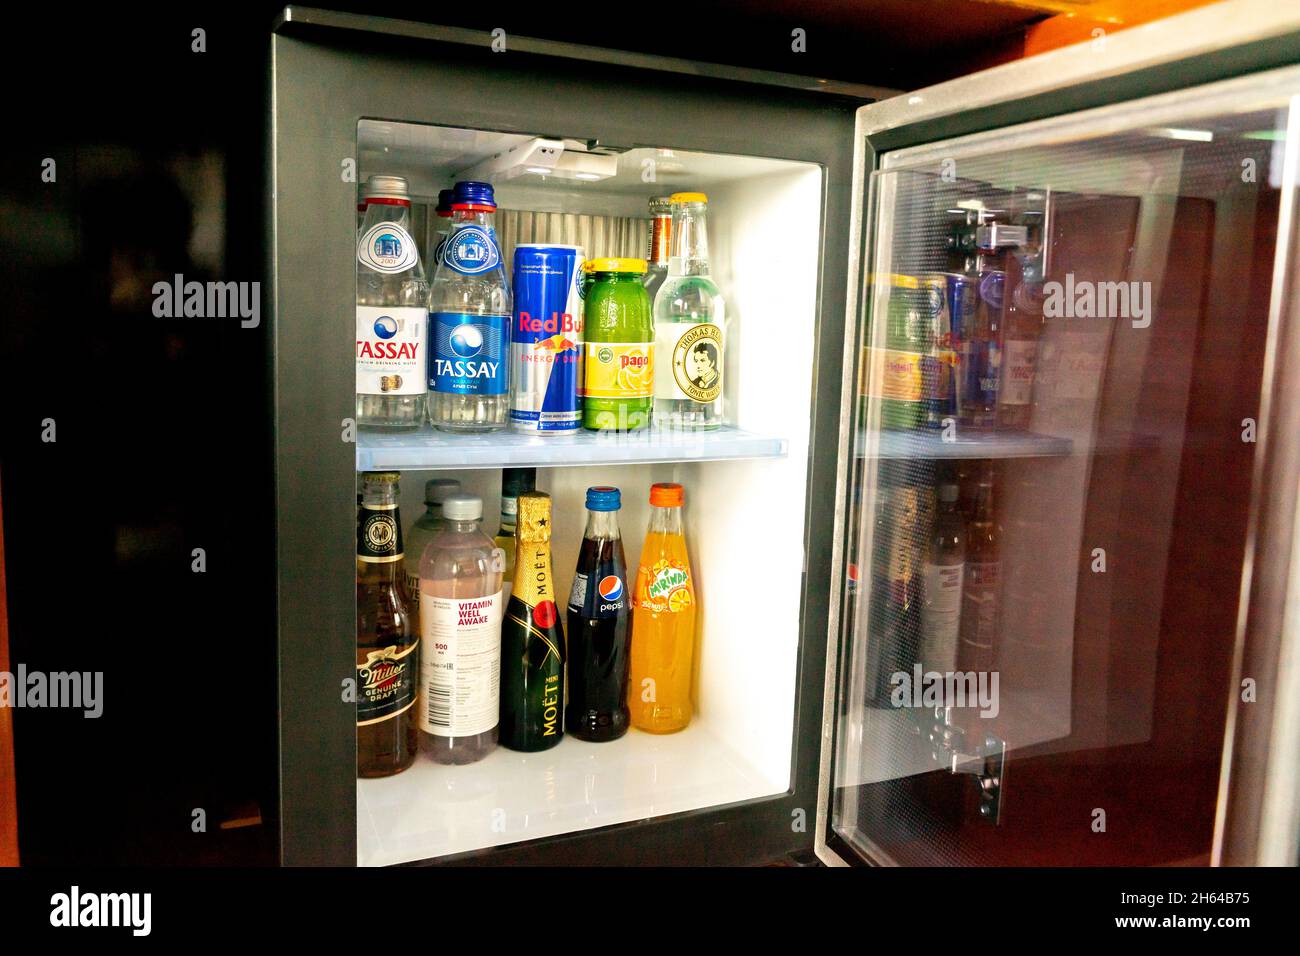 Hotel mini bar fridge -Fotos und -Bildmaterial in hoher Auflösung – Alamy